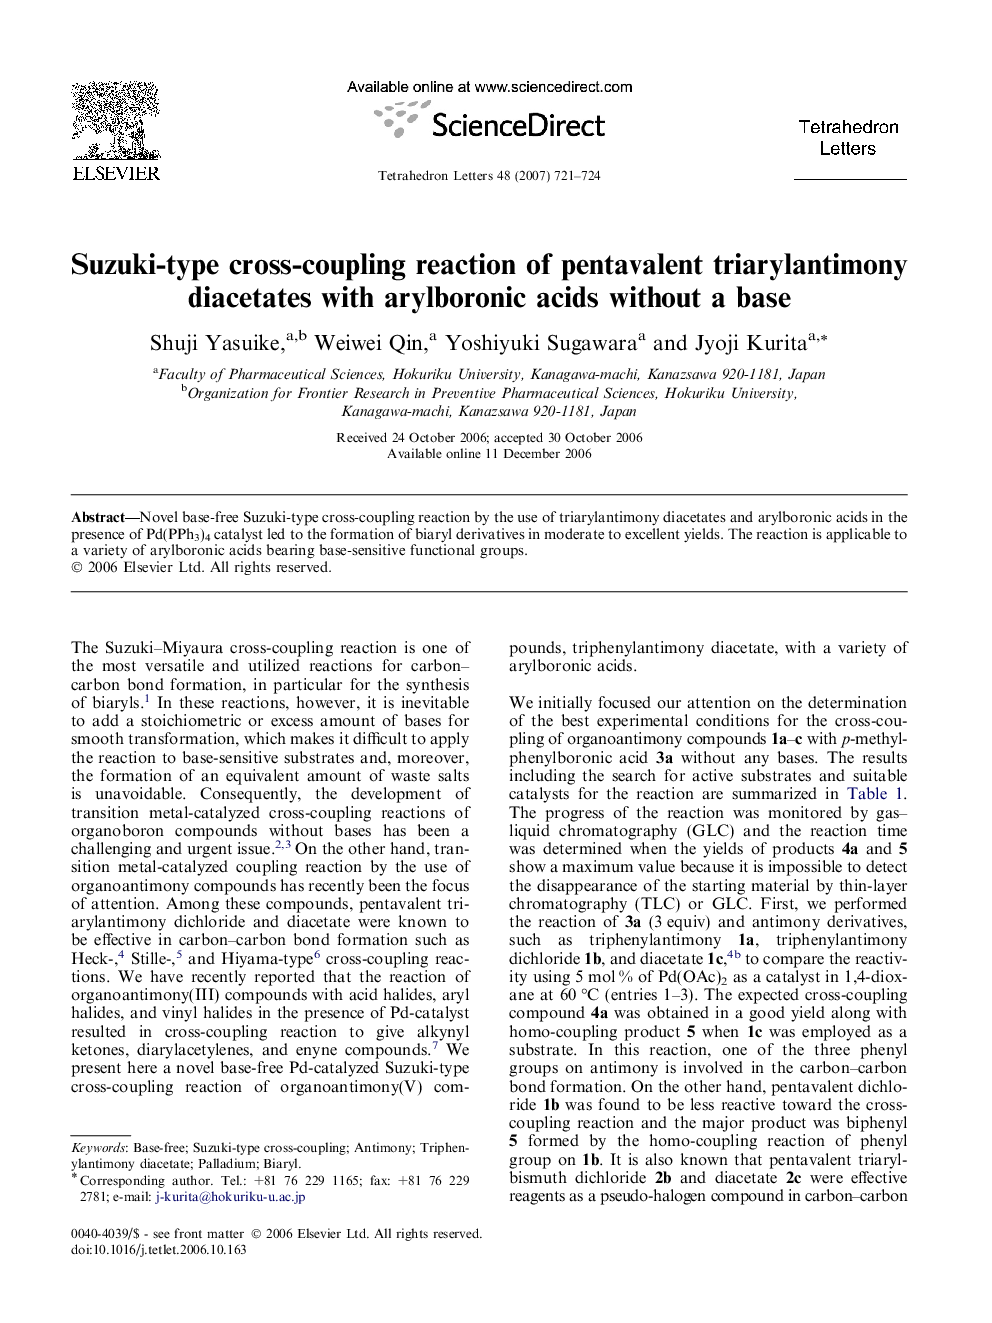 Suzuki-type cross-coupling reaction of pentavalent triarylantimony diacetates with arylboronic acids without a base